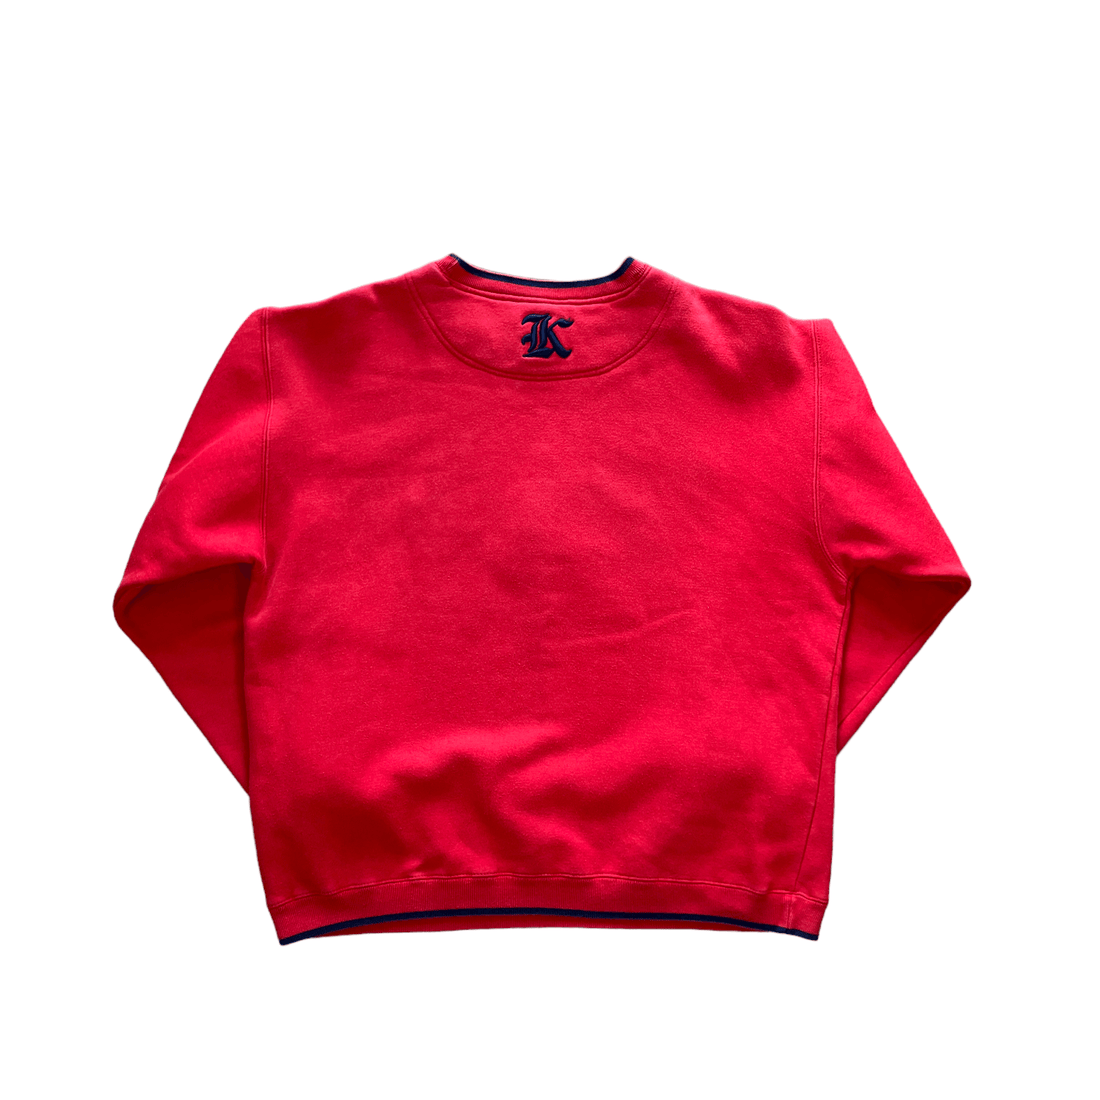 Vintage 90s Red Karl Kani Sweatshirt - Large - The Streetwear Studio